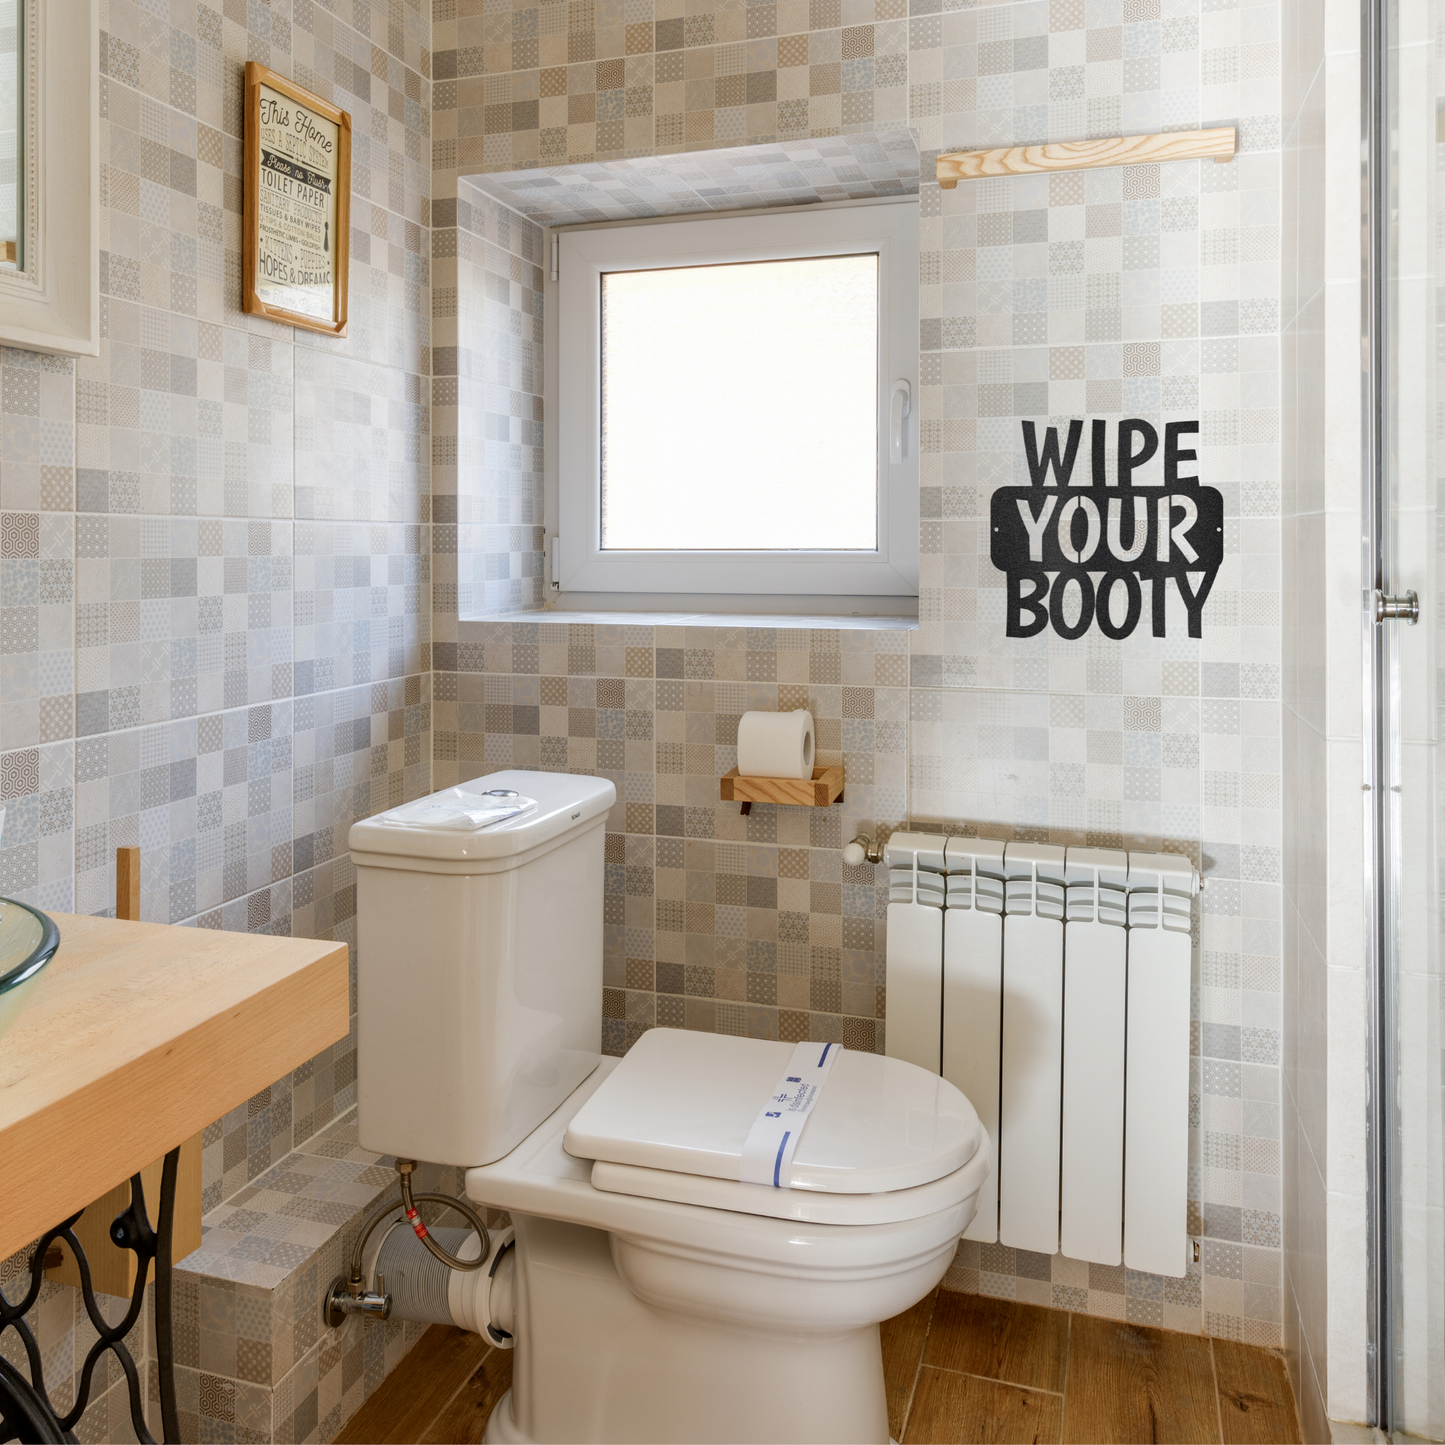 Wipe Your Booty Quote, Bathroom Sign, Modern Bathroom, Farmhouse Decor, Custom Metal Sign, Indoor Outdoor Steel Wall Sign